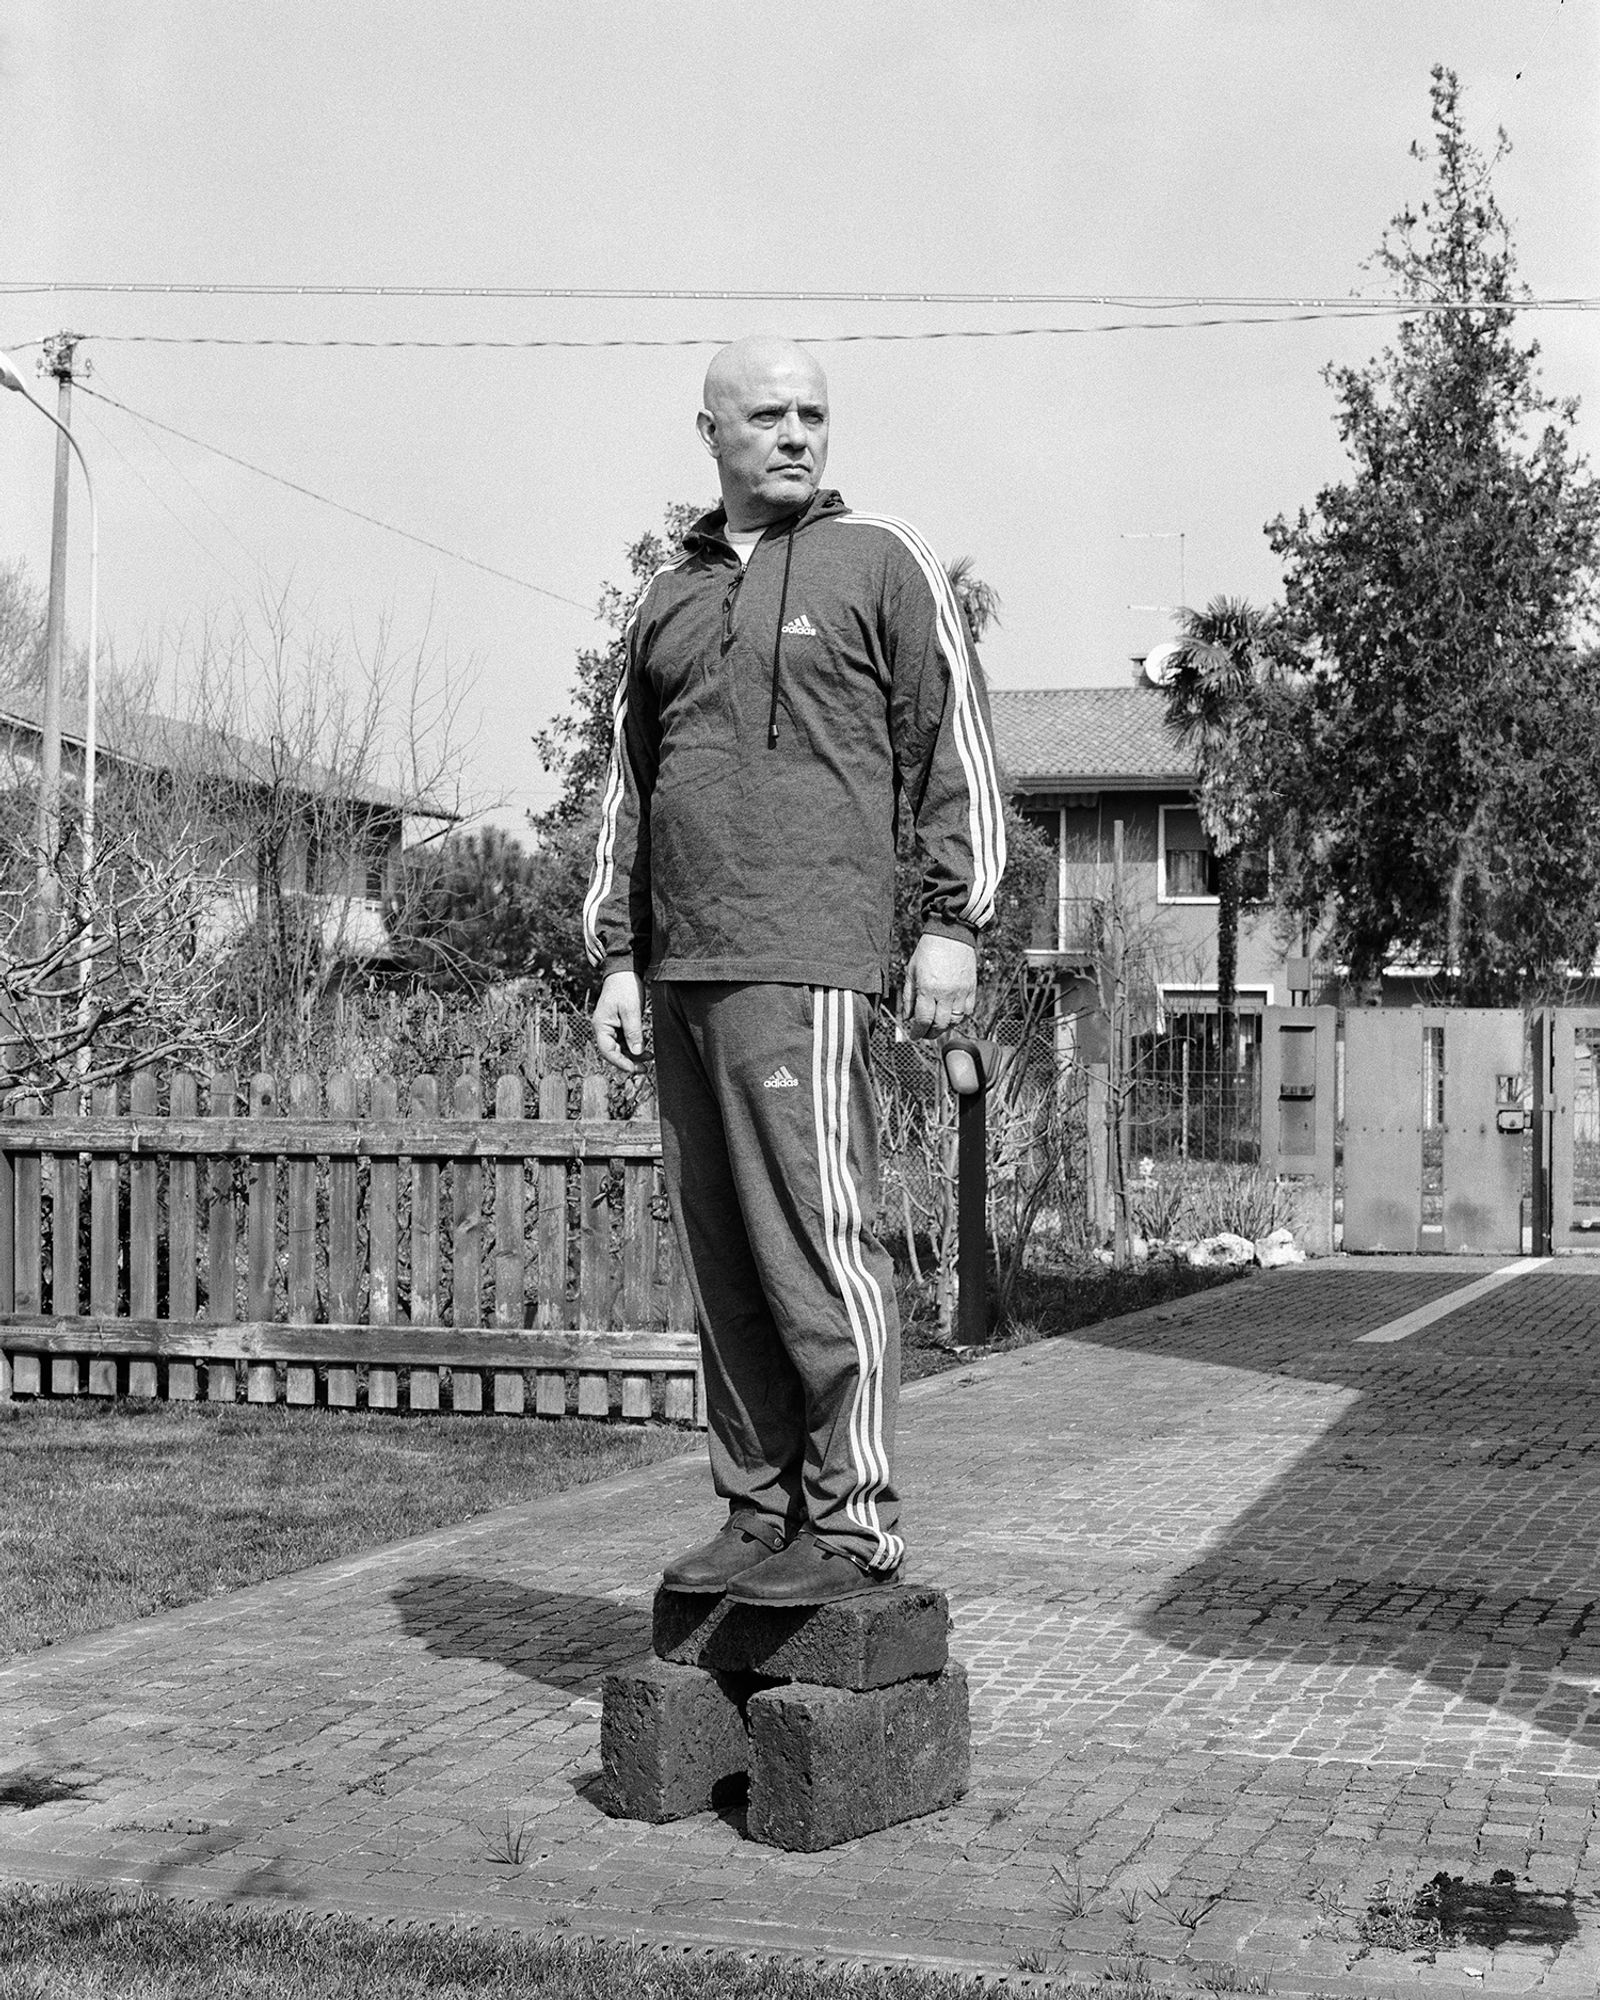 © Eleonora Agostini - Father standing on bricks, 2018